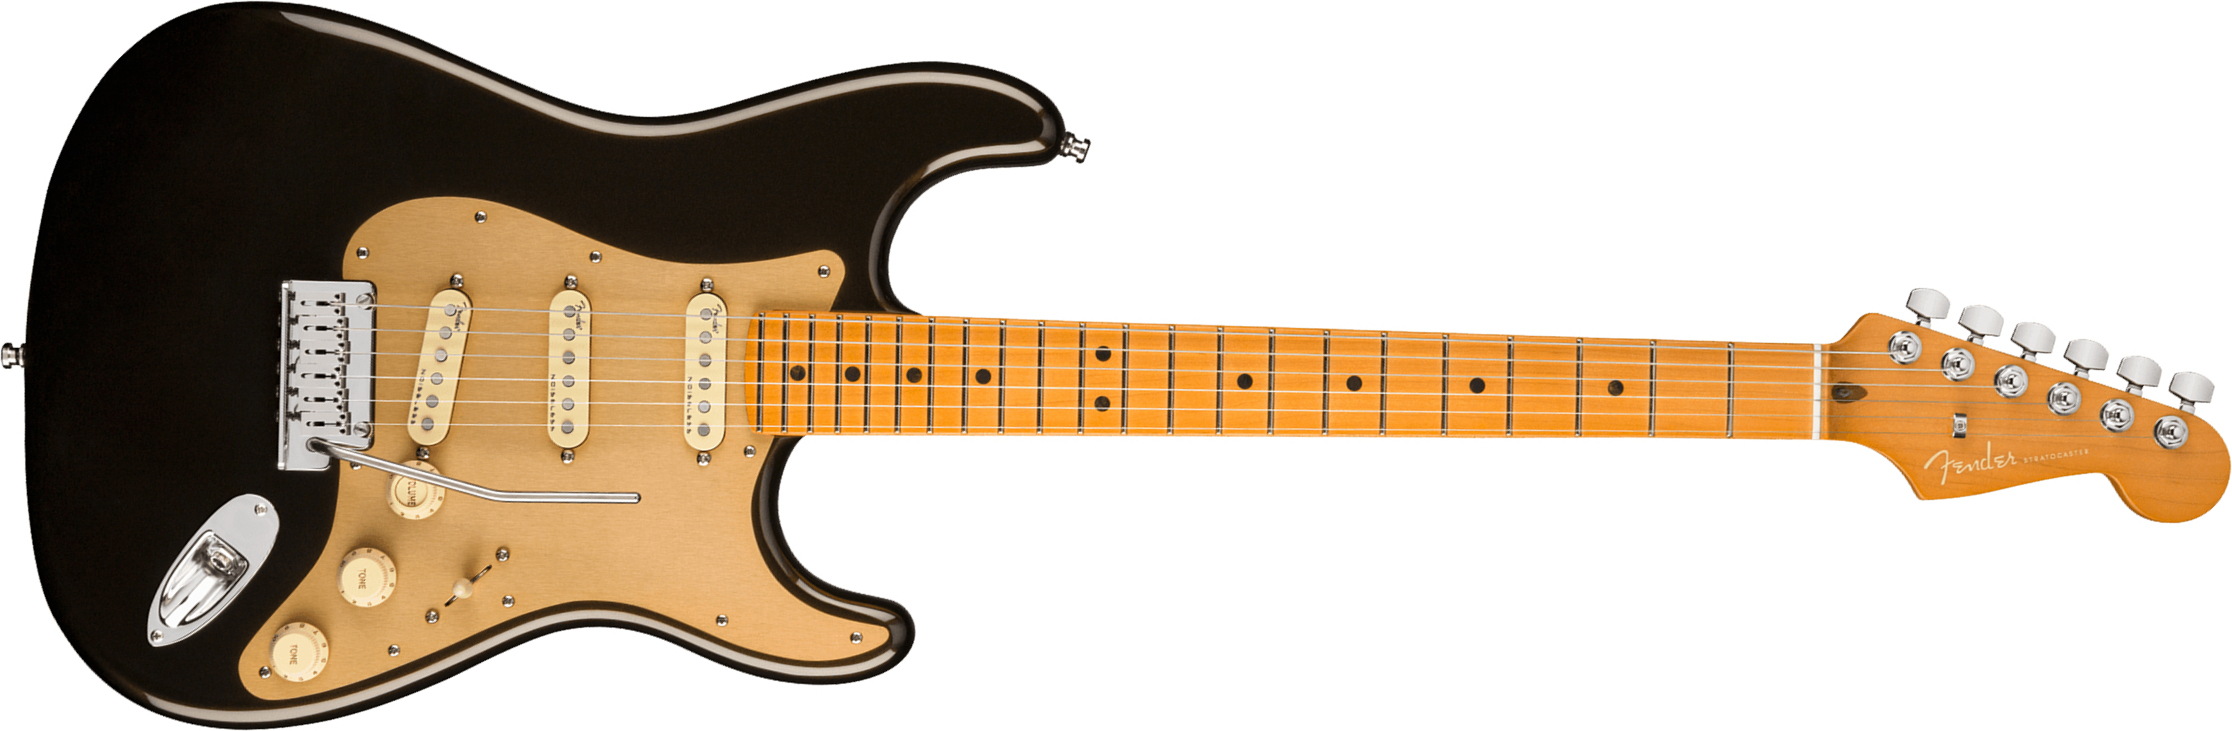 Fender Strat American Ultra 2019 Usa Mn - Texas Tea - Guitare Électrique Forme Str - Main picture